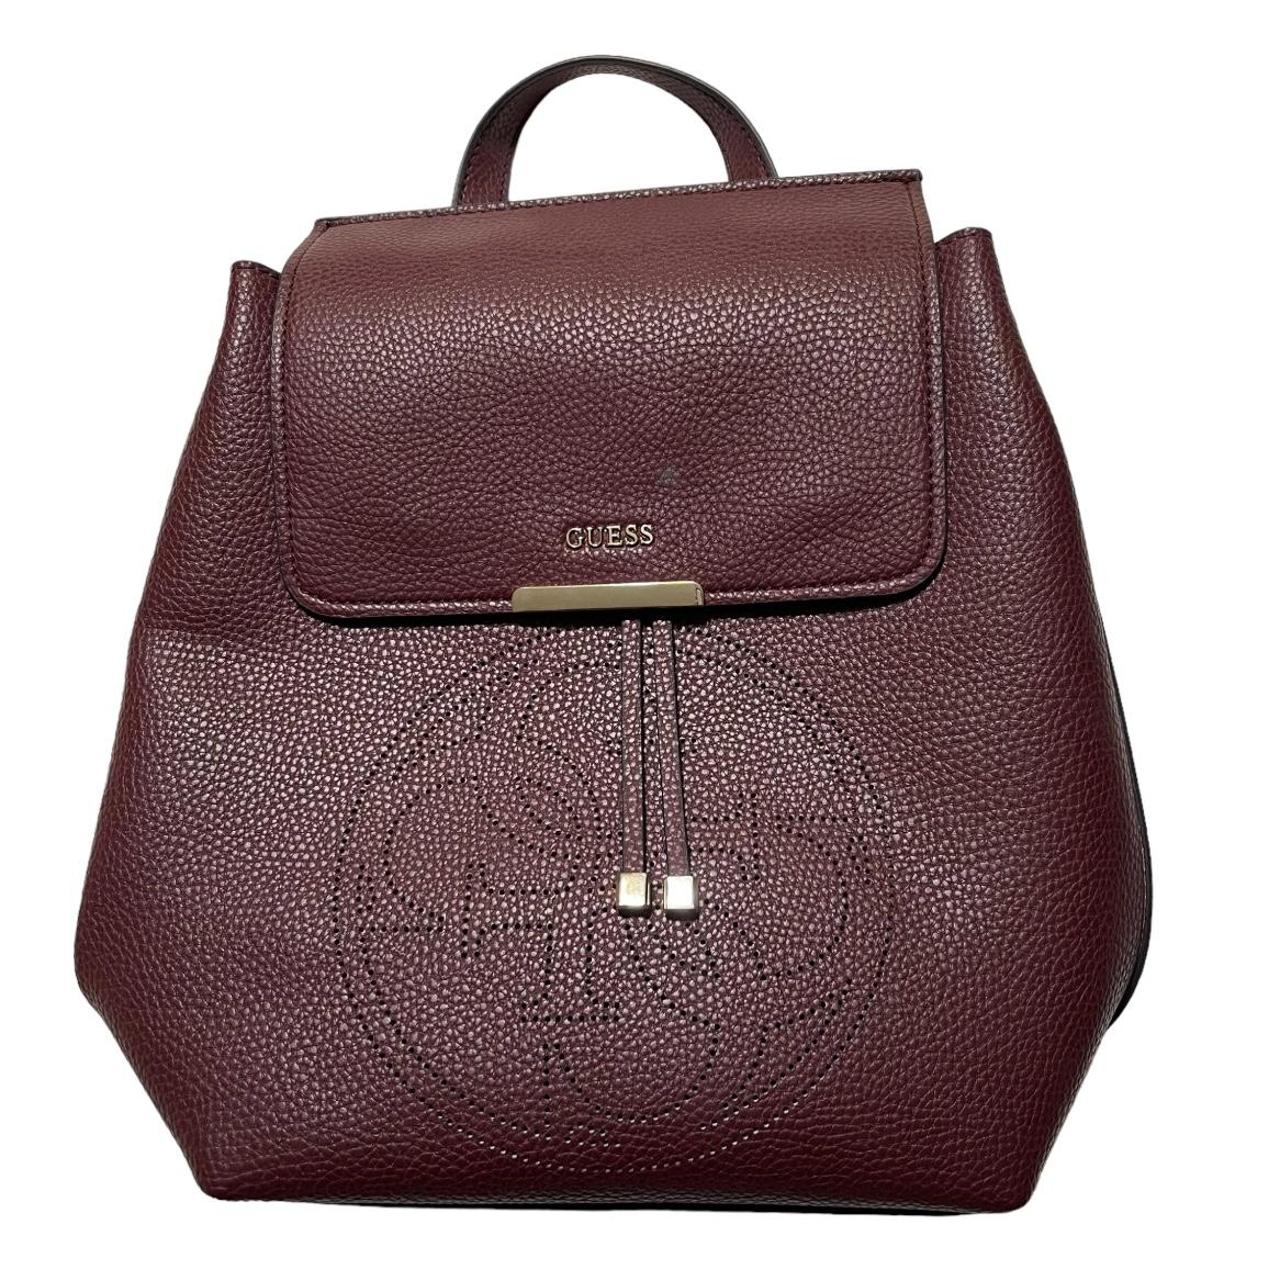 GUESS Mini Backpack Handbag Gray Logo / Black trim front zippered pouch |  eBay